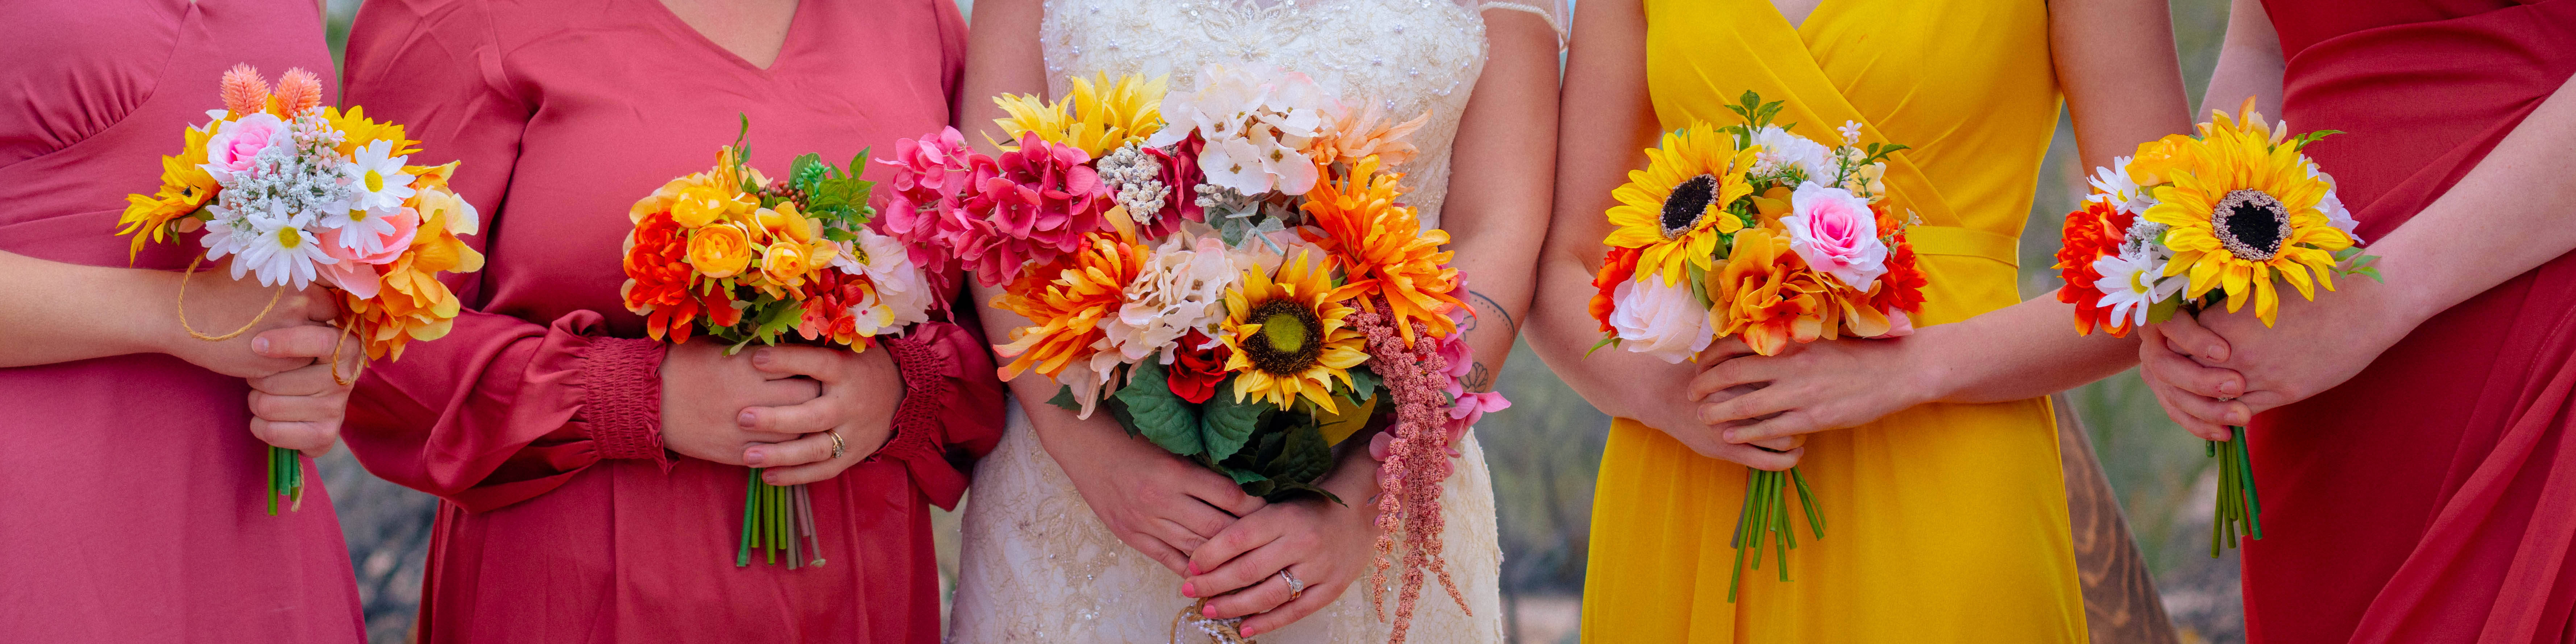 Bridesmaids With Sunflower Bouquet